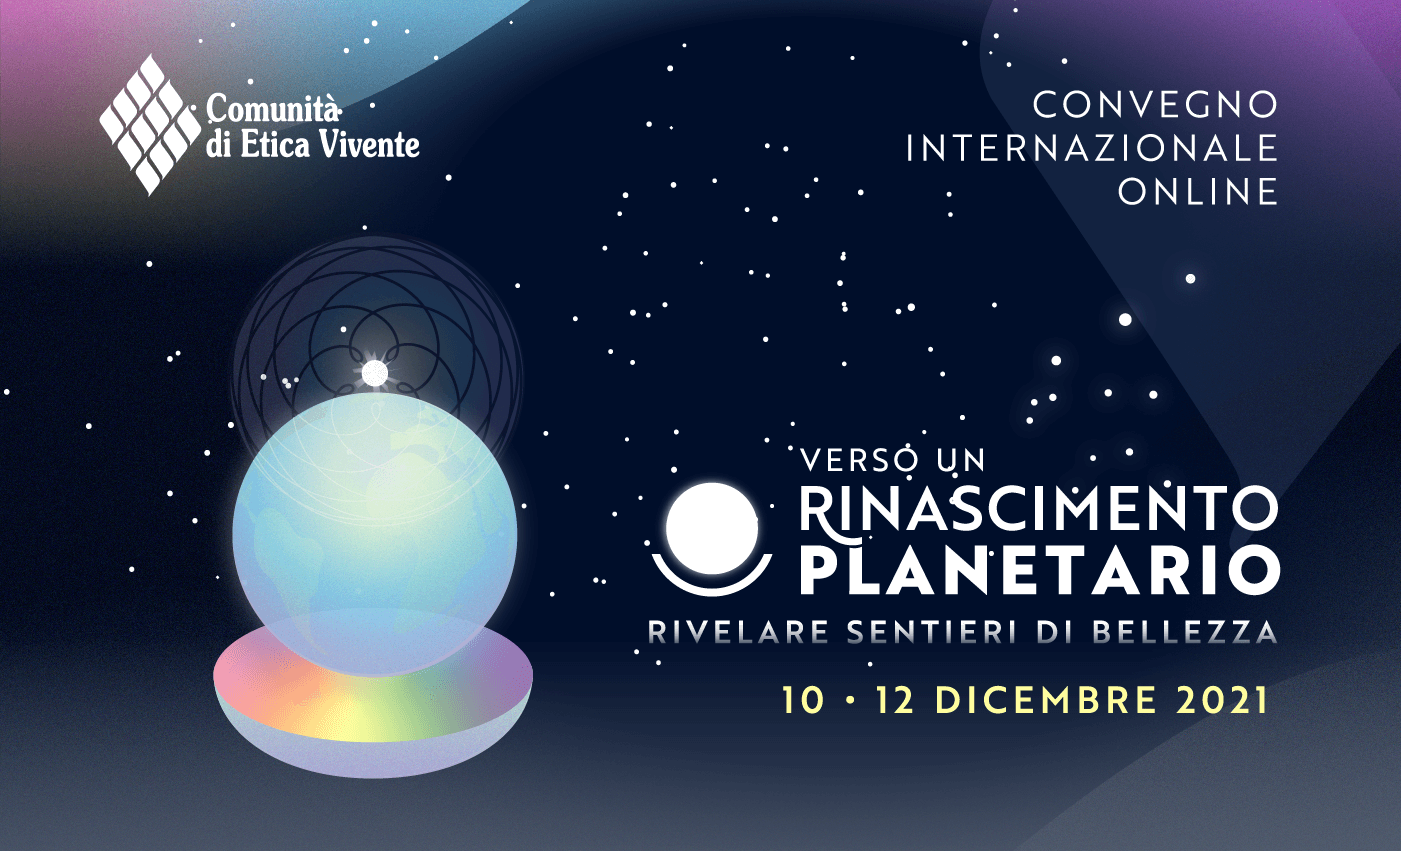 Rinasacimento Planetario - COnvegno internazionale online